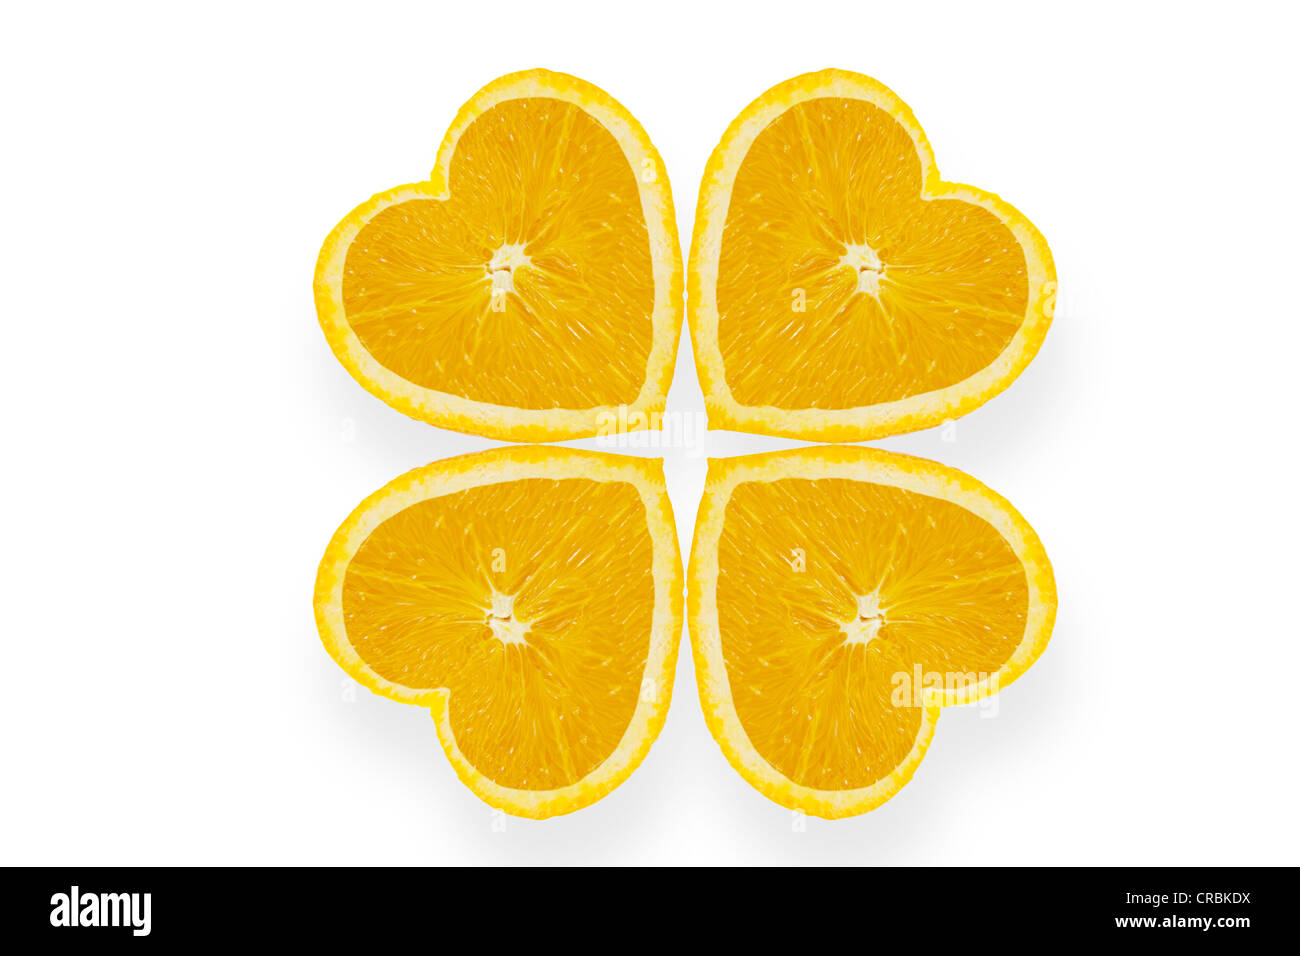 Oranges, heart-shaped, arranged as a cloverleaf Stock Photo